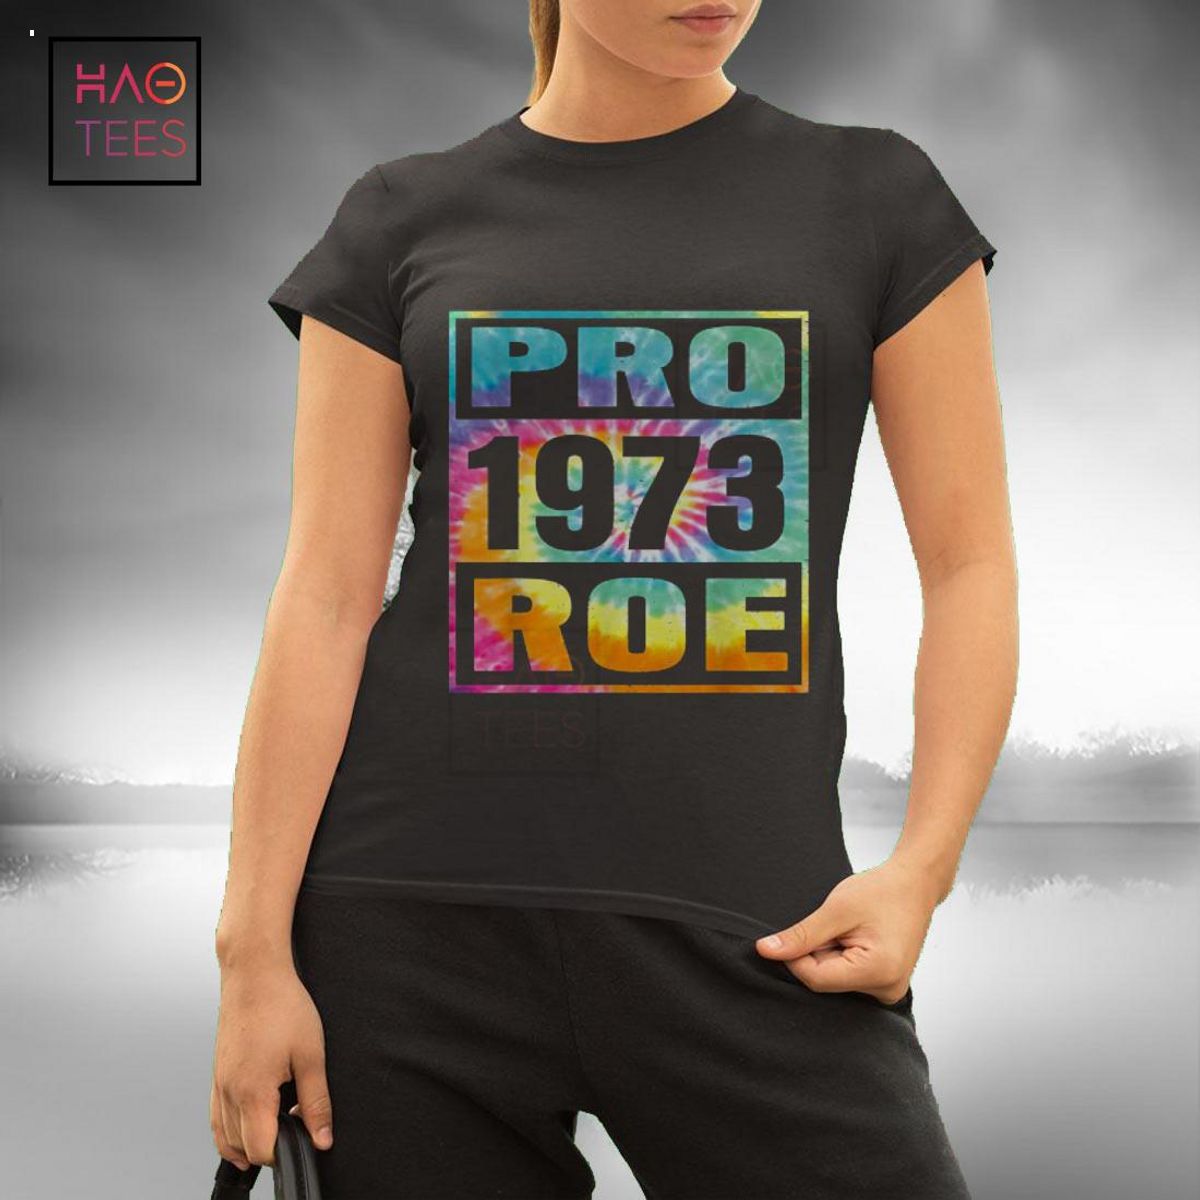 Tie Dye Pro Roe 1973 Pro Choice Women's Rights Shirt